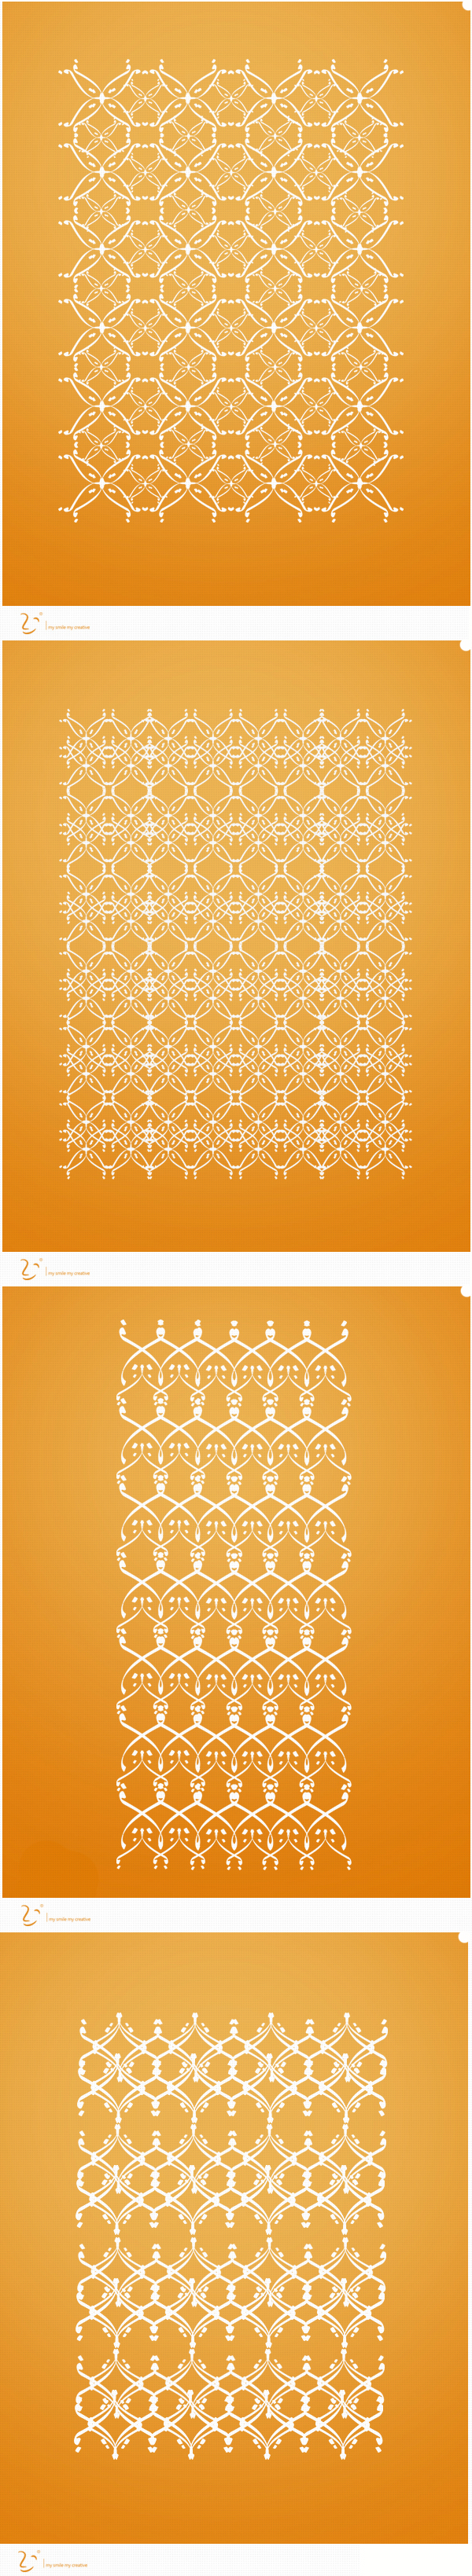 islam pattern